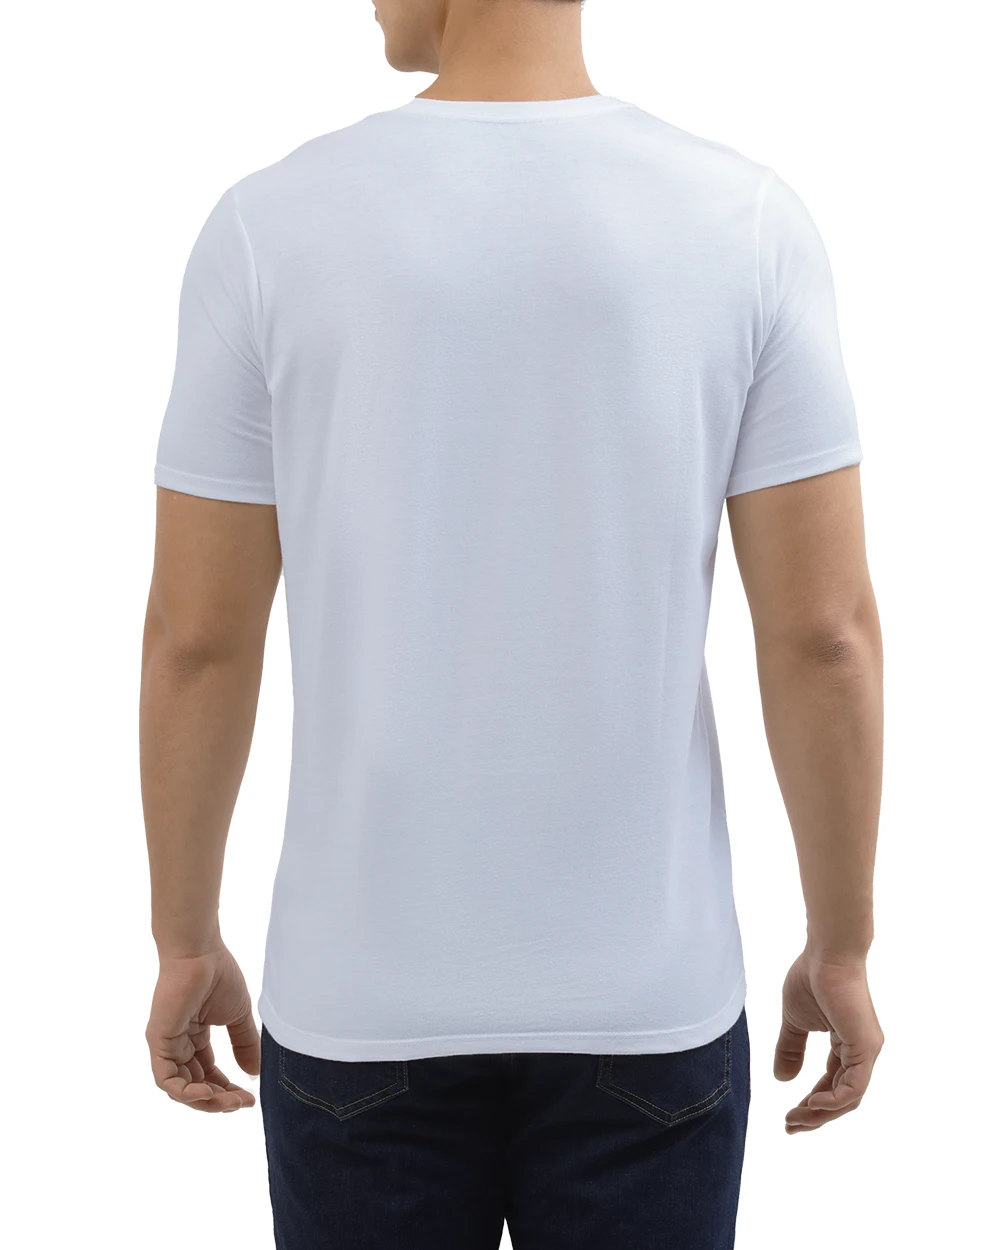 Camiseta cuello v lisa manga corta blanca